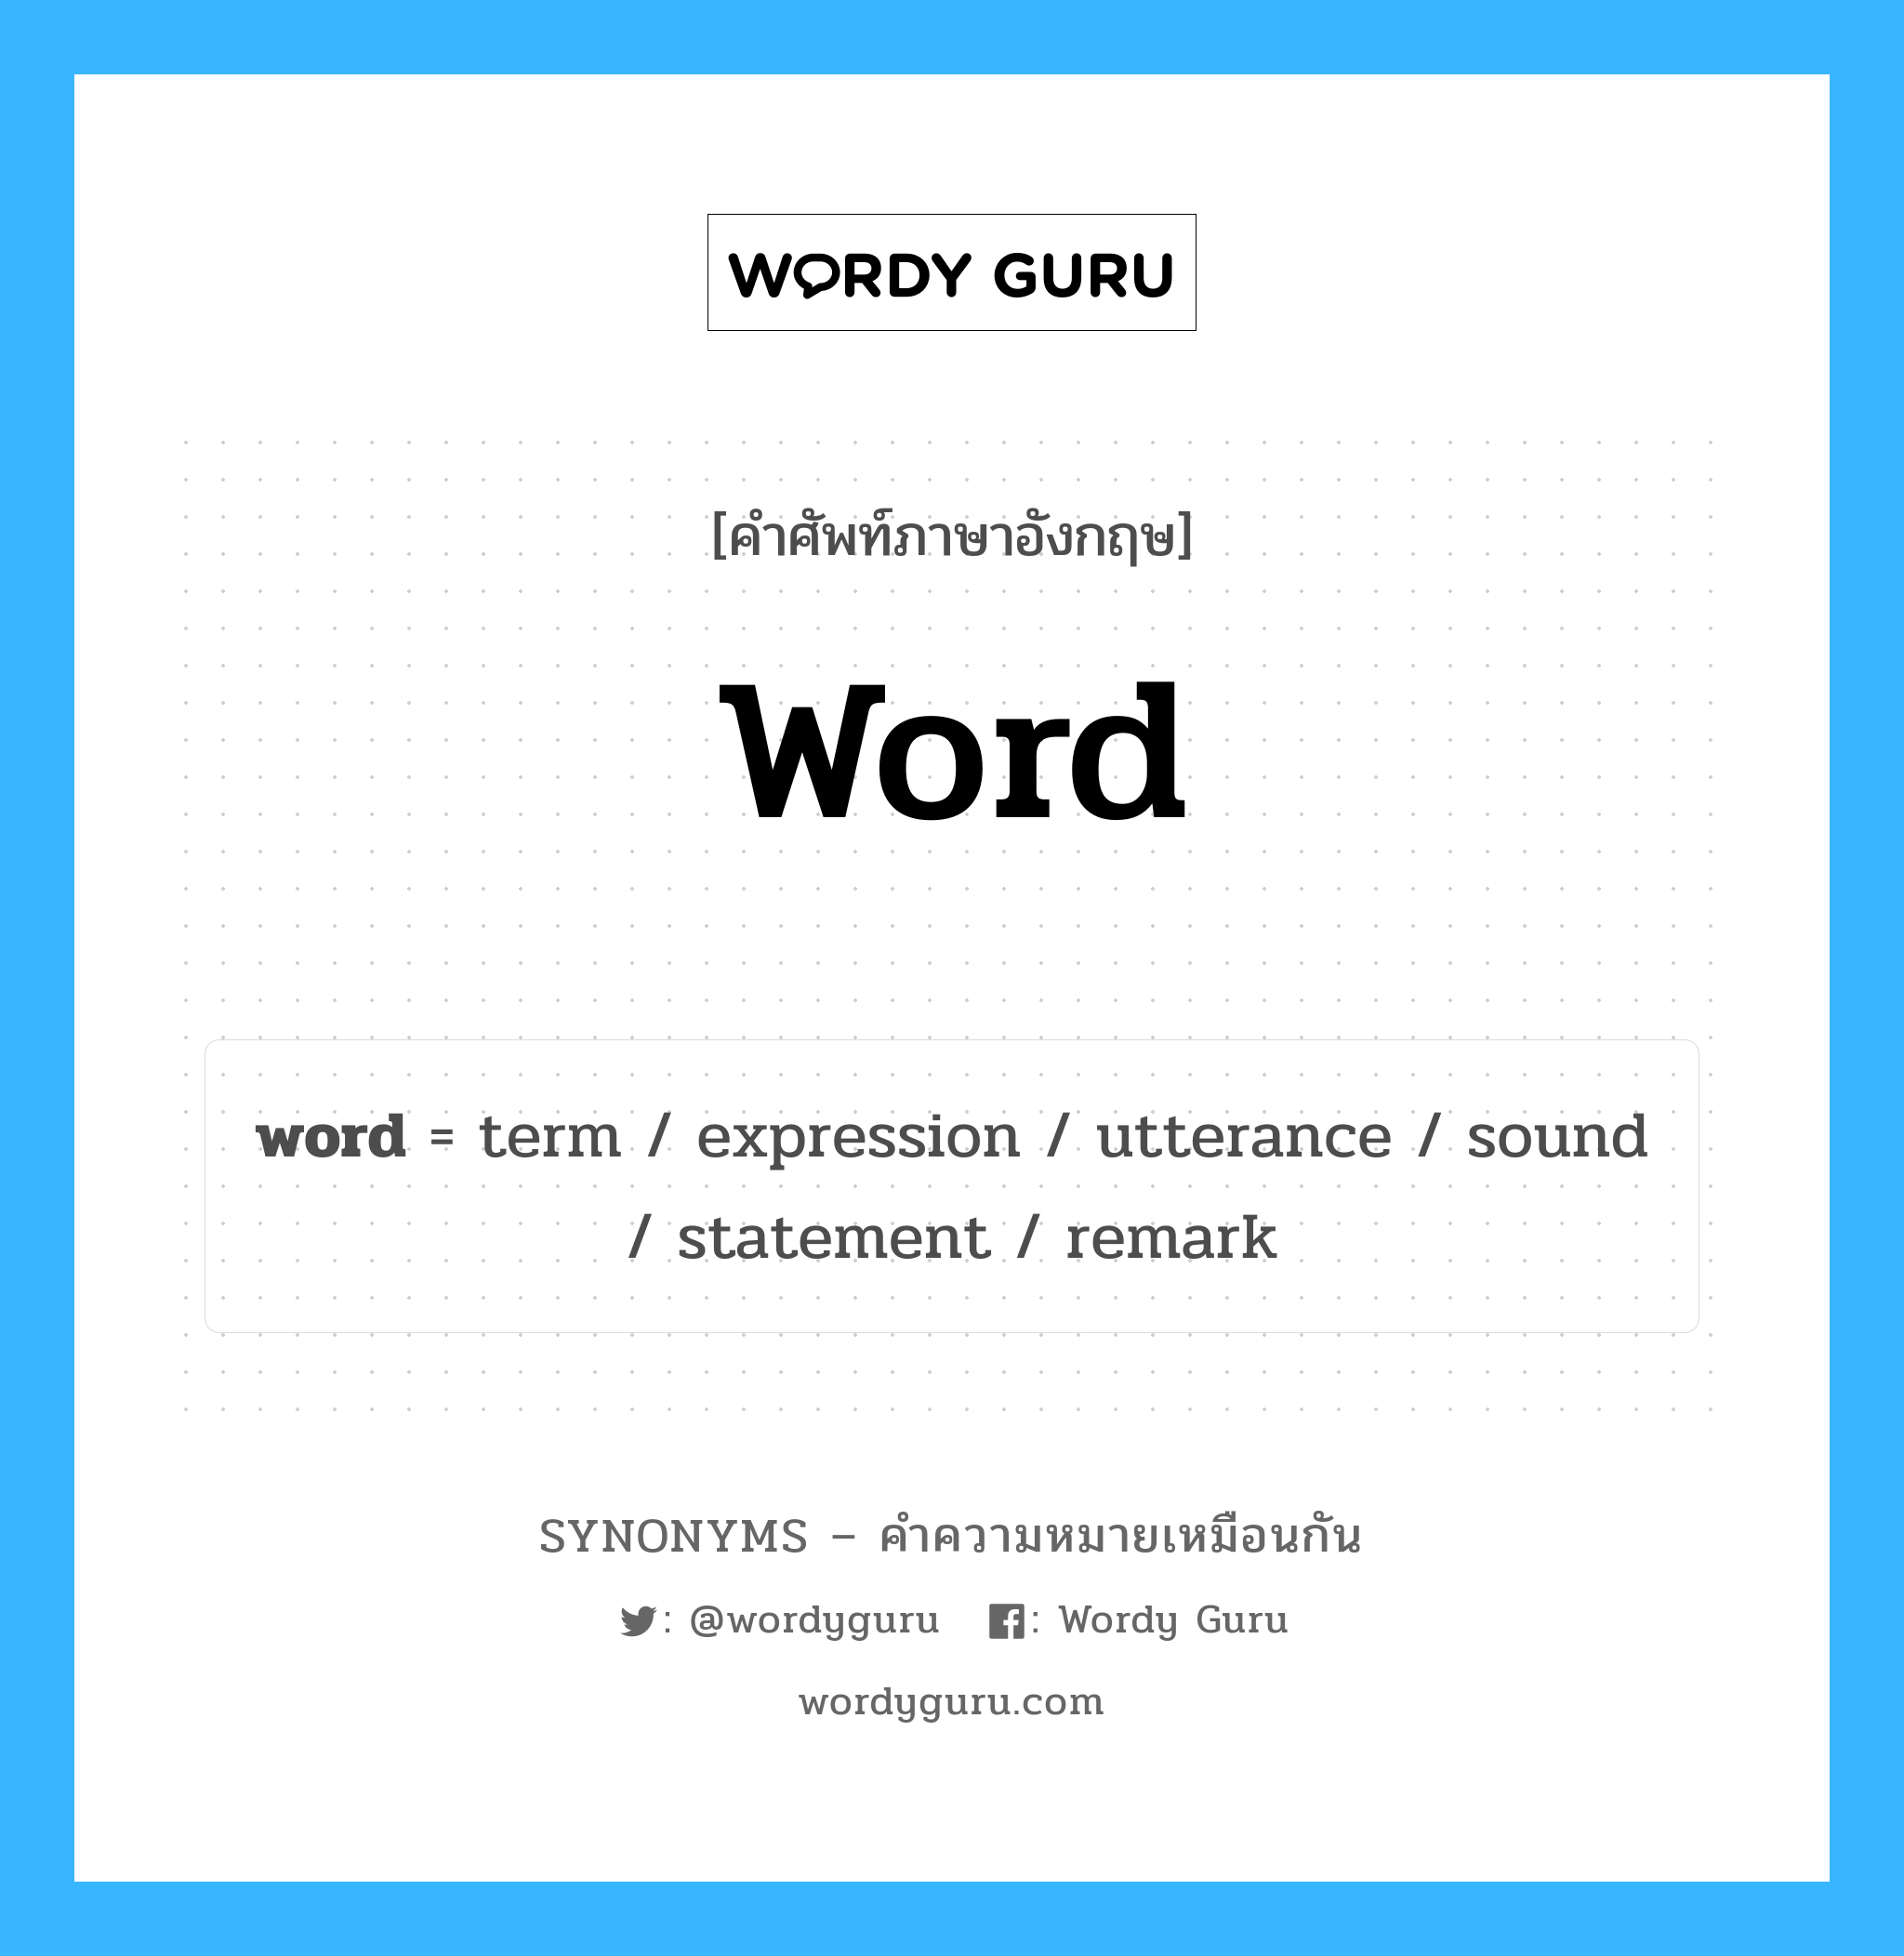 statement เป็นหนึ่งใน word และมีคำอื่น ๆ อีกดังนี้, คำศัพท์ภาษาอังกฤษ statement ความหมายคล้ายกันกับ word แปลว่า คำชี้แจง หมวด word